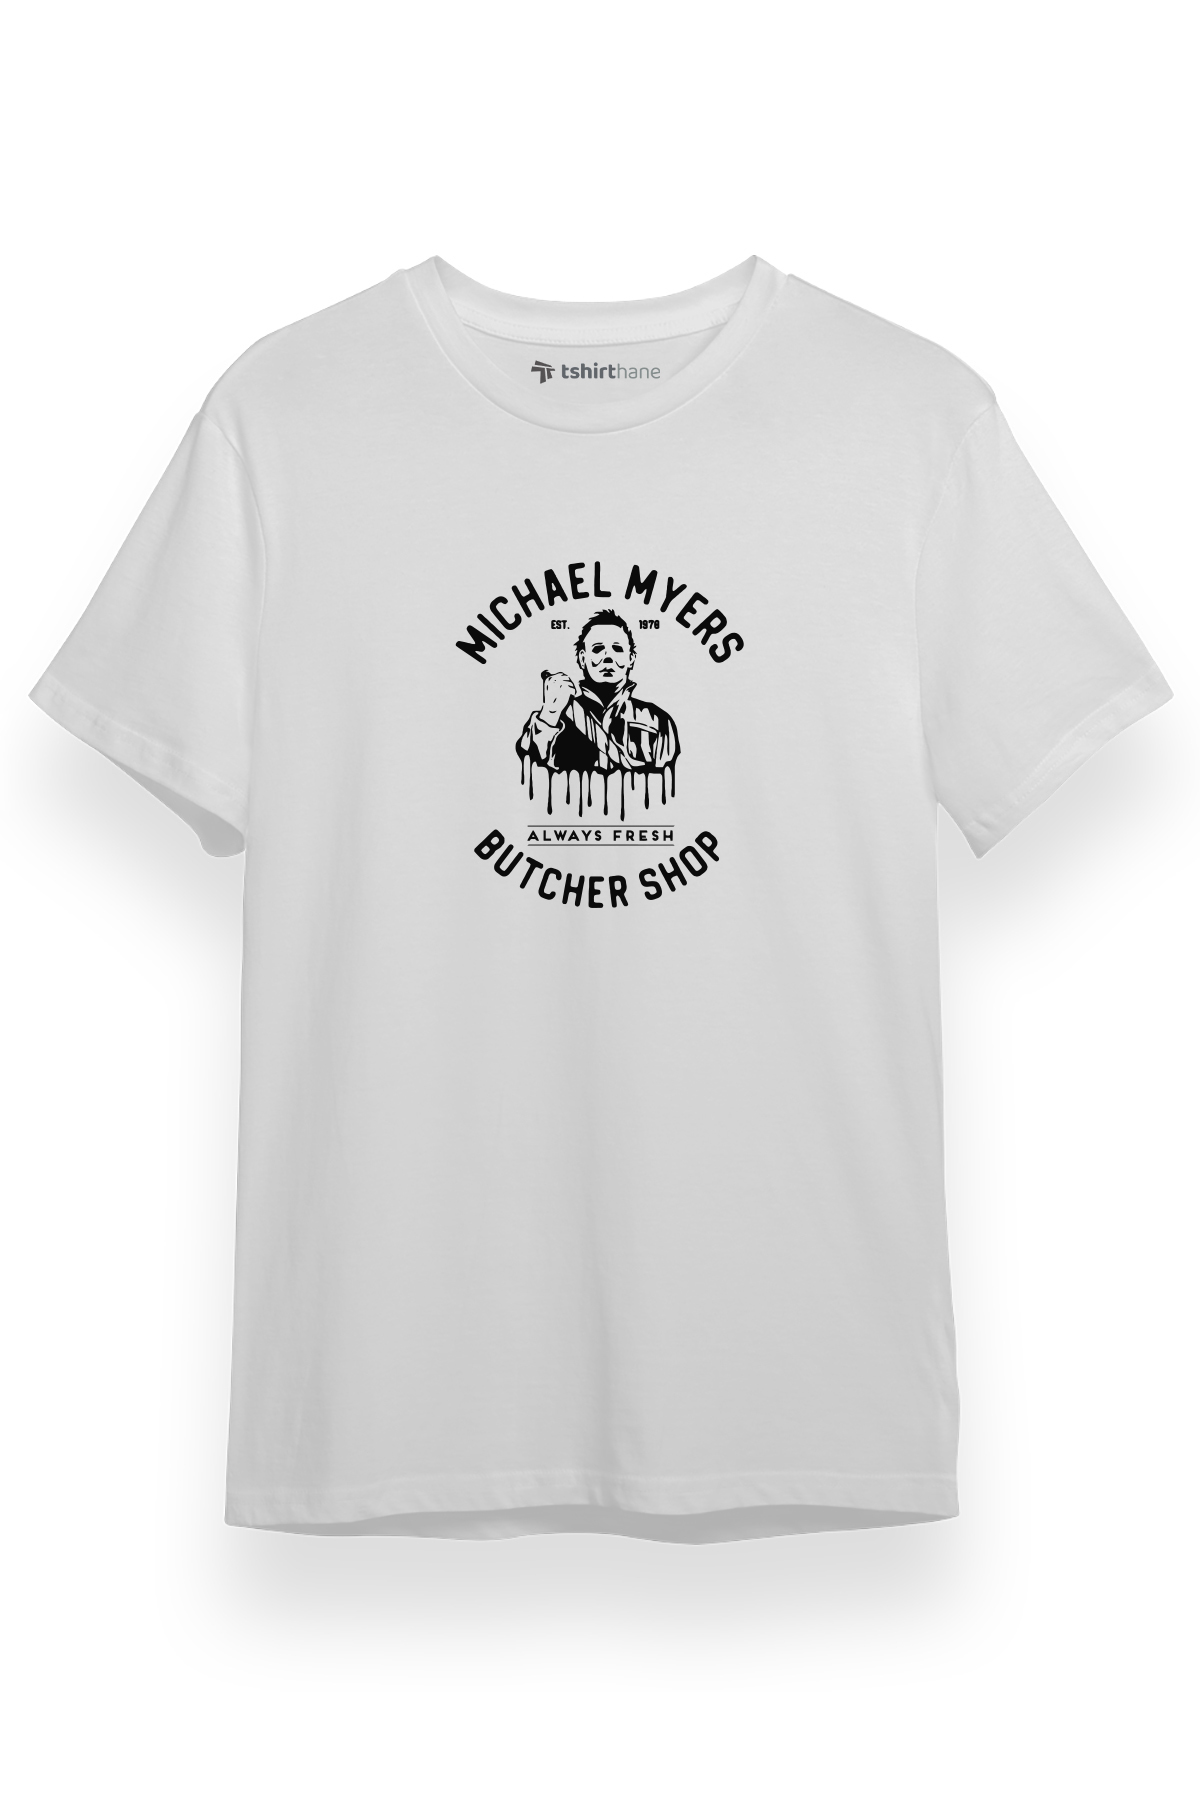 Michael Myers Butcher Shop Beyaz Kısa kol Erkek Tshirt